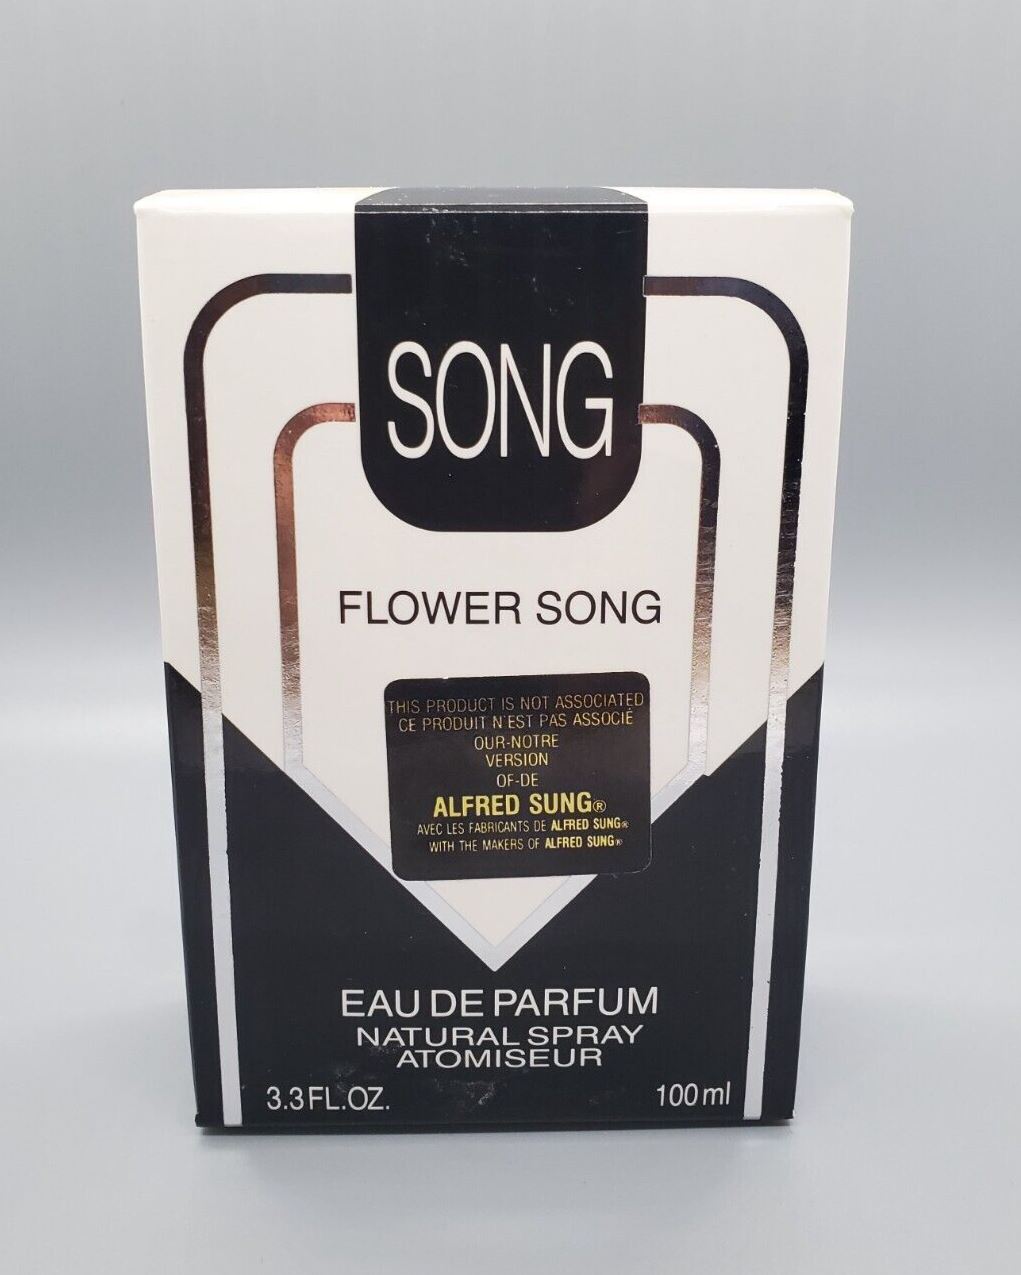 Song Flower Song Eau de Parfum Natural Spray Atomiseur 3.3oz 100ml